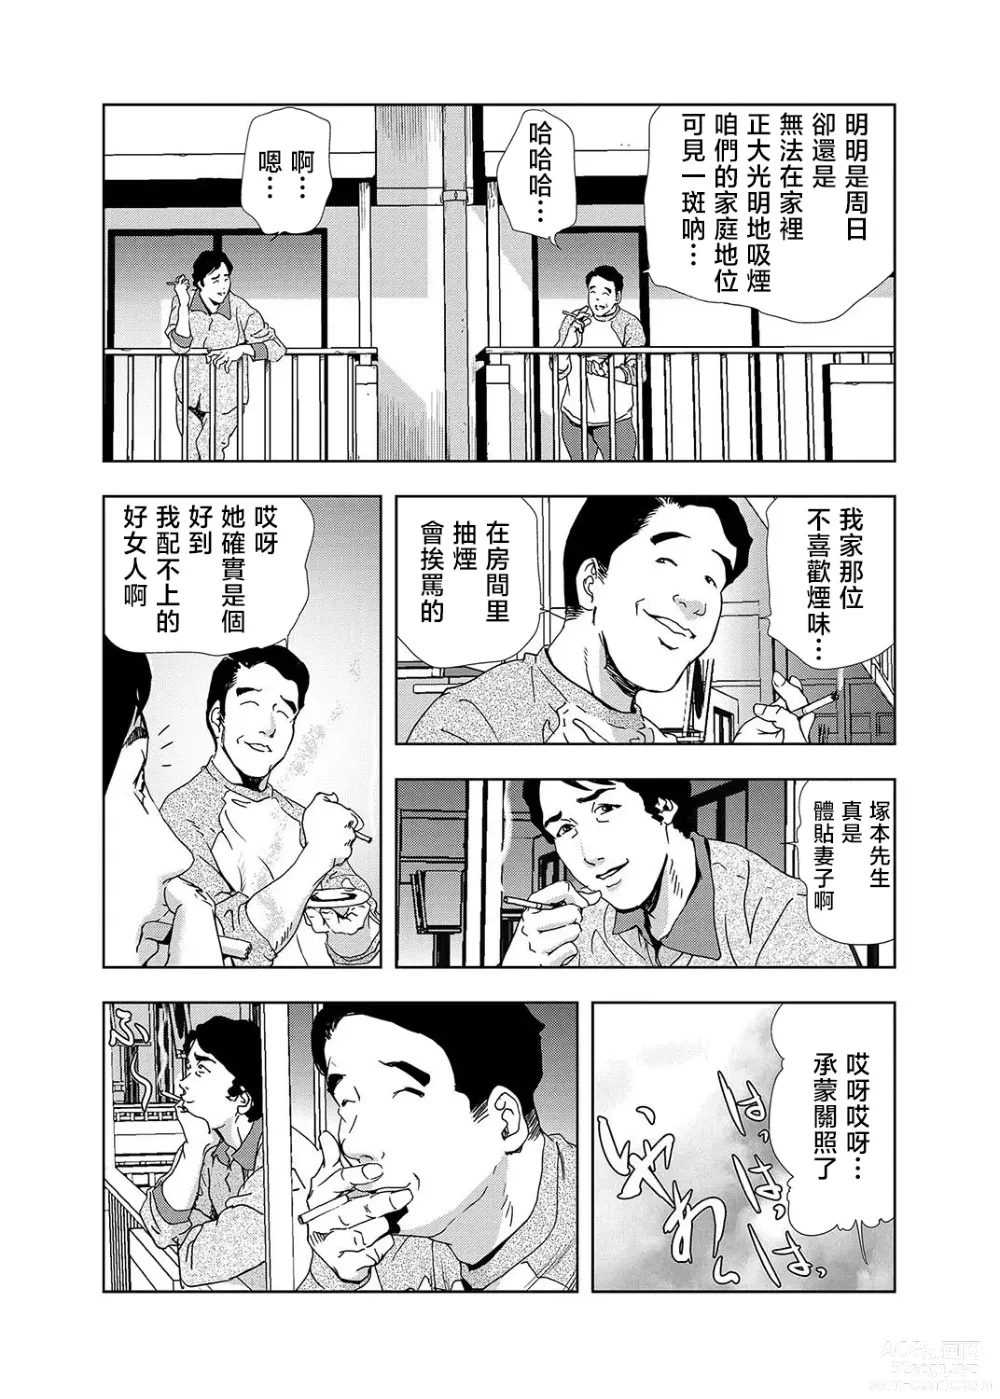 Page 8 of manga Netorare Vol.02